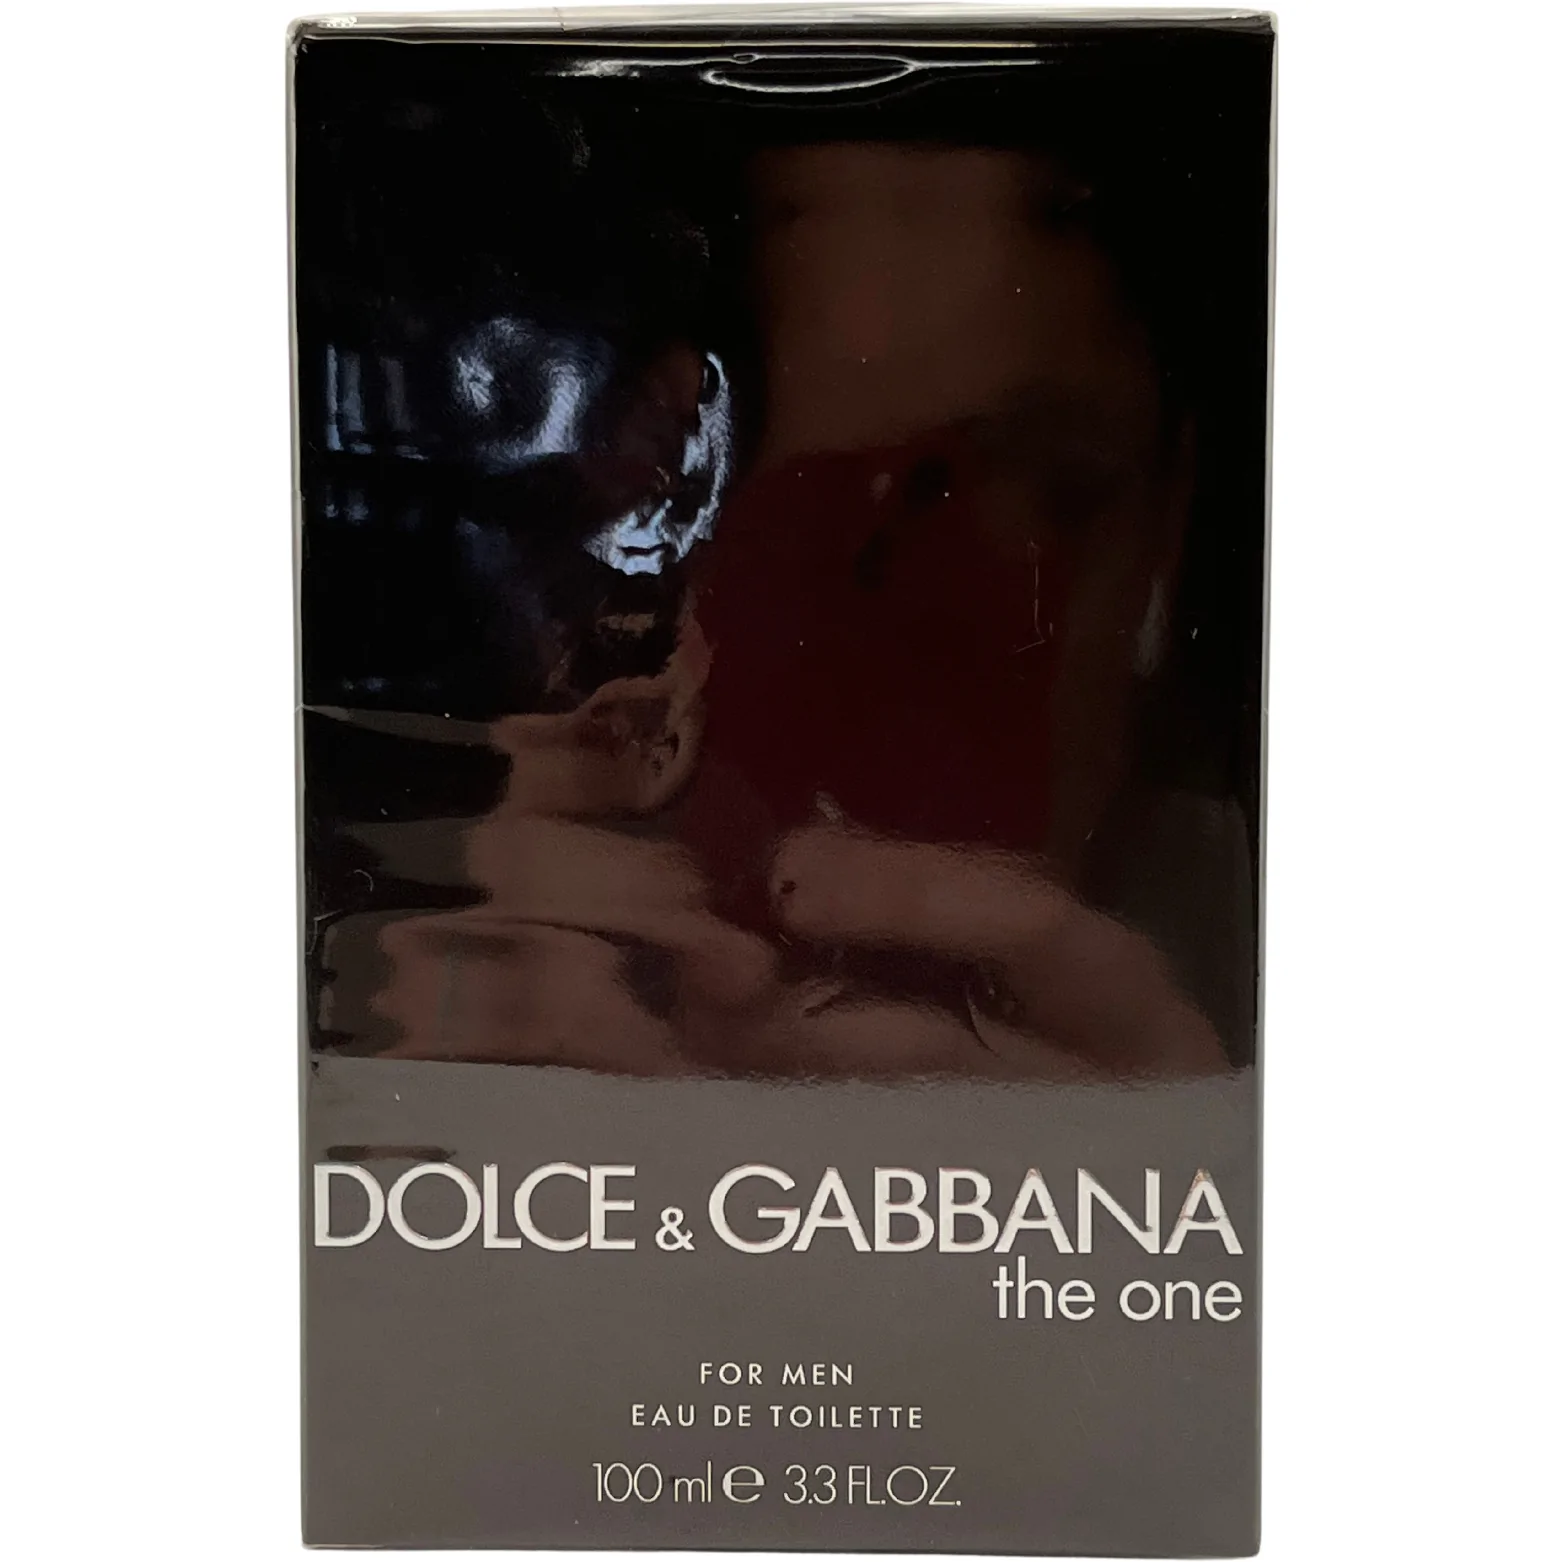 Dolce & Gabbana The One Men's Perfume: Men's Cologne / 3.3 Oz